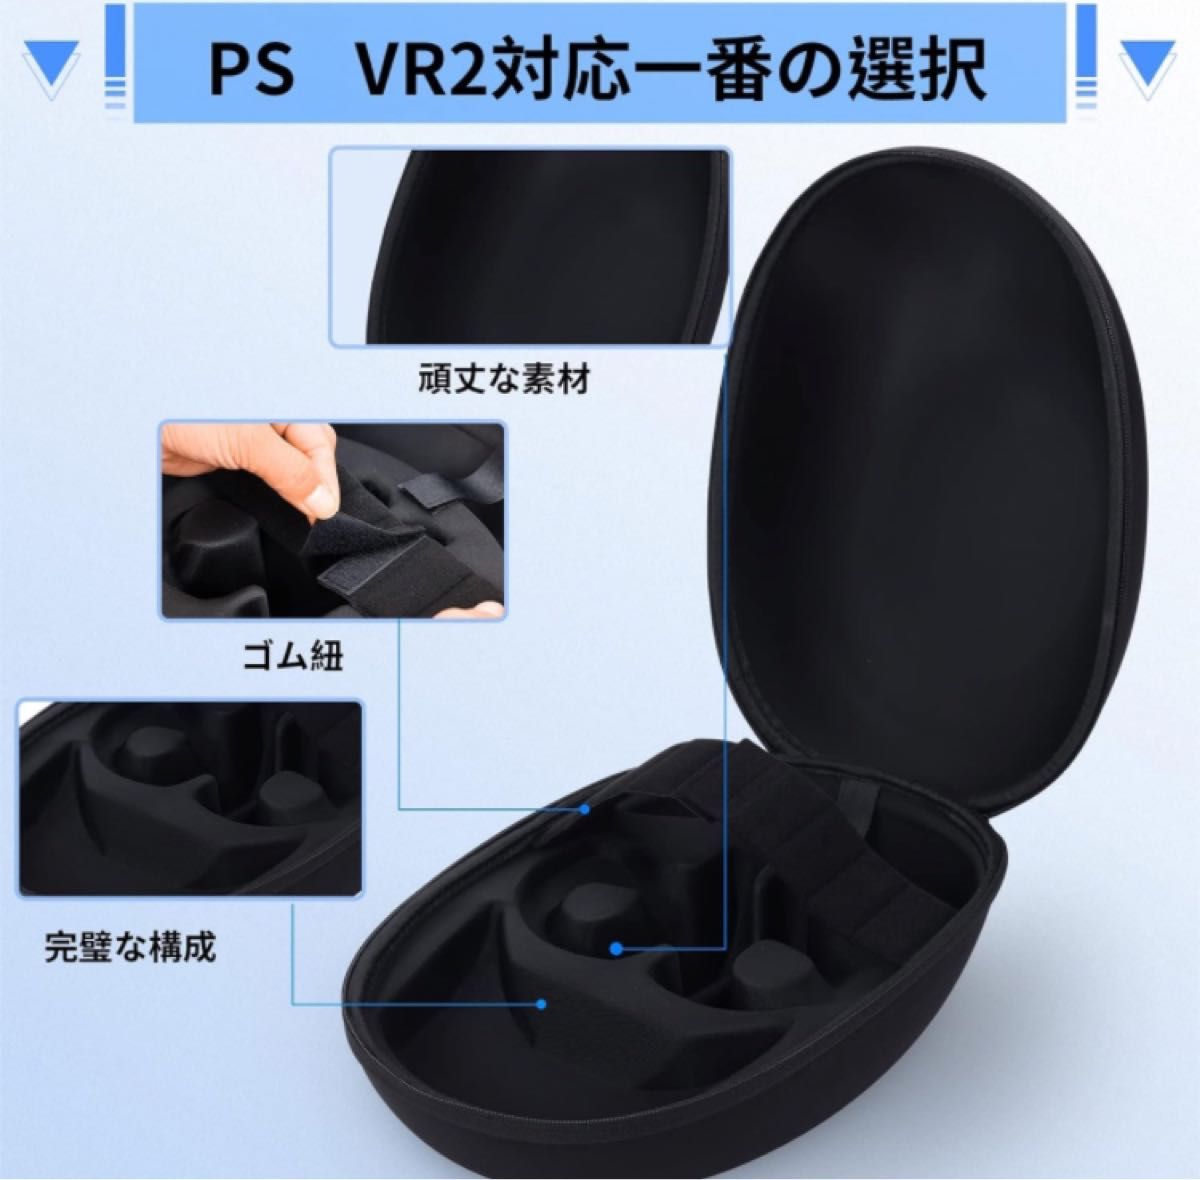 PS VR2 収納バッグ 保護カバー キャリングバッグ 収納ケース 多機能対応 Play*Station VRデバイス収納